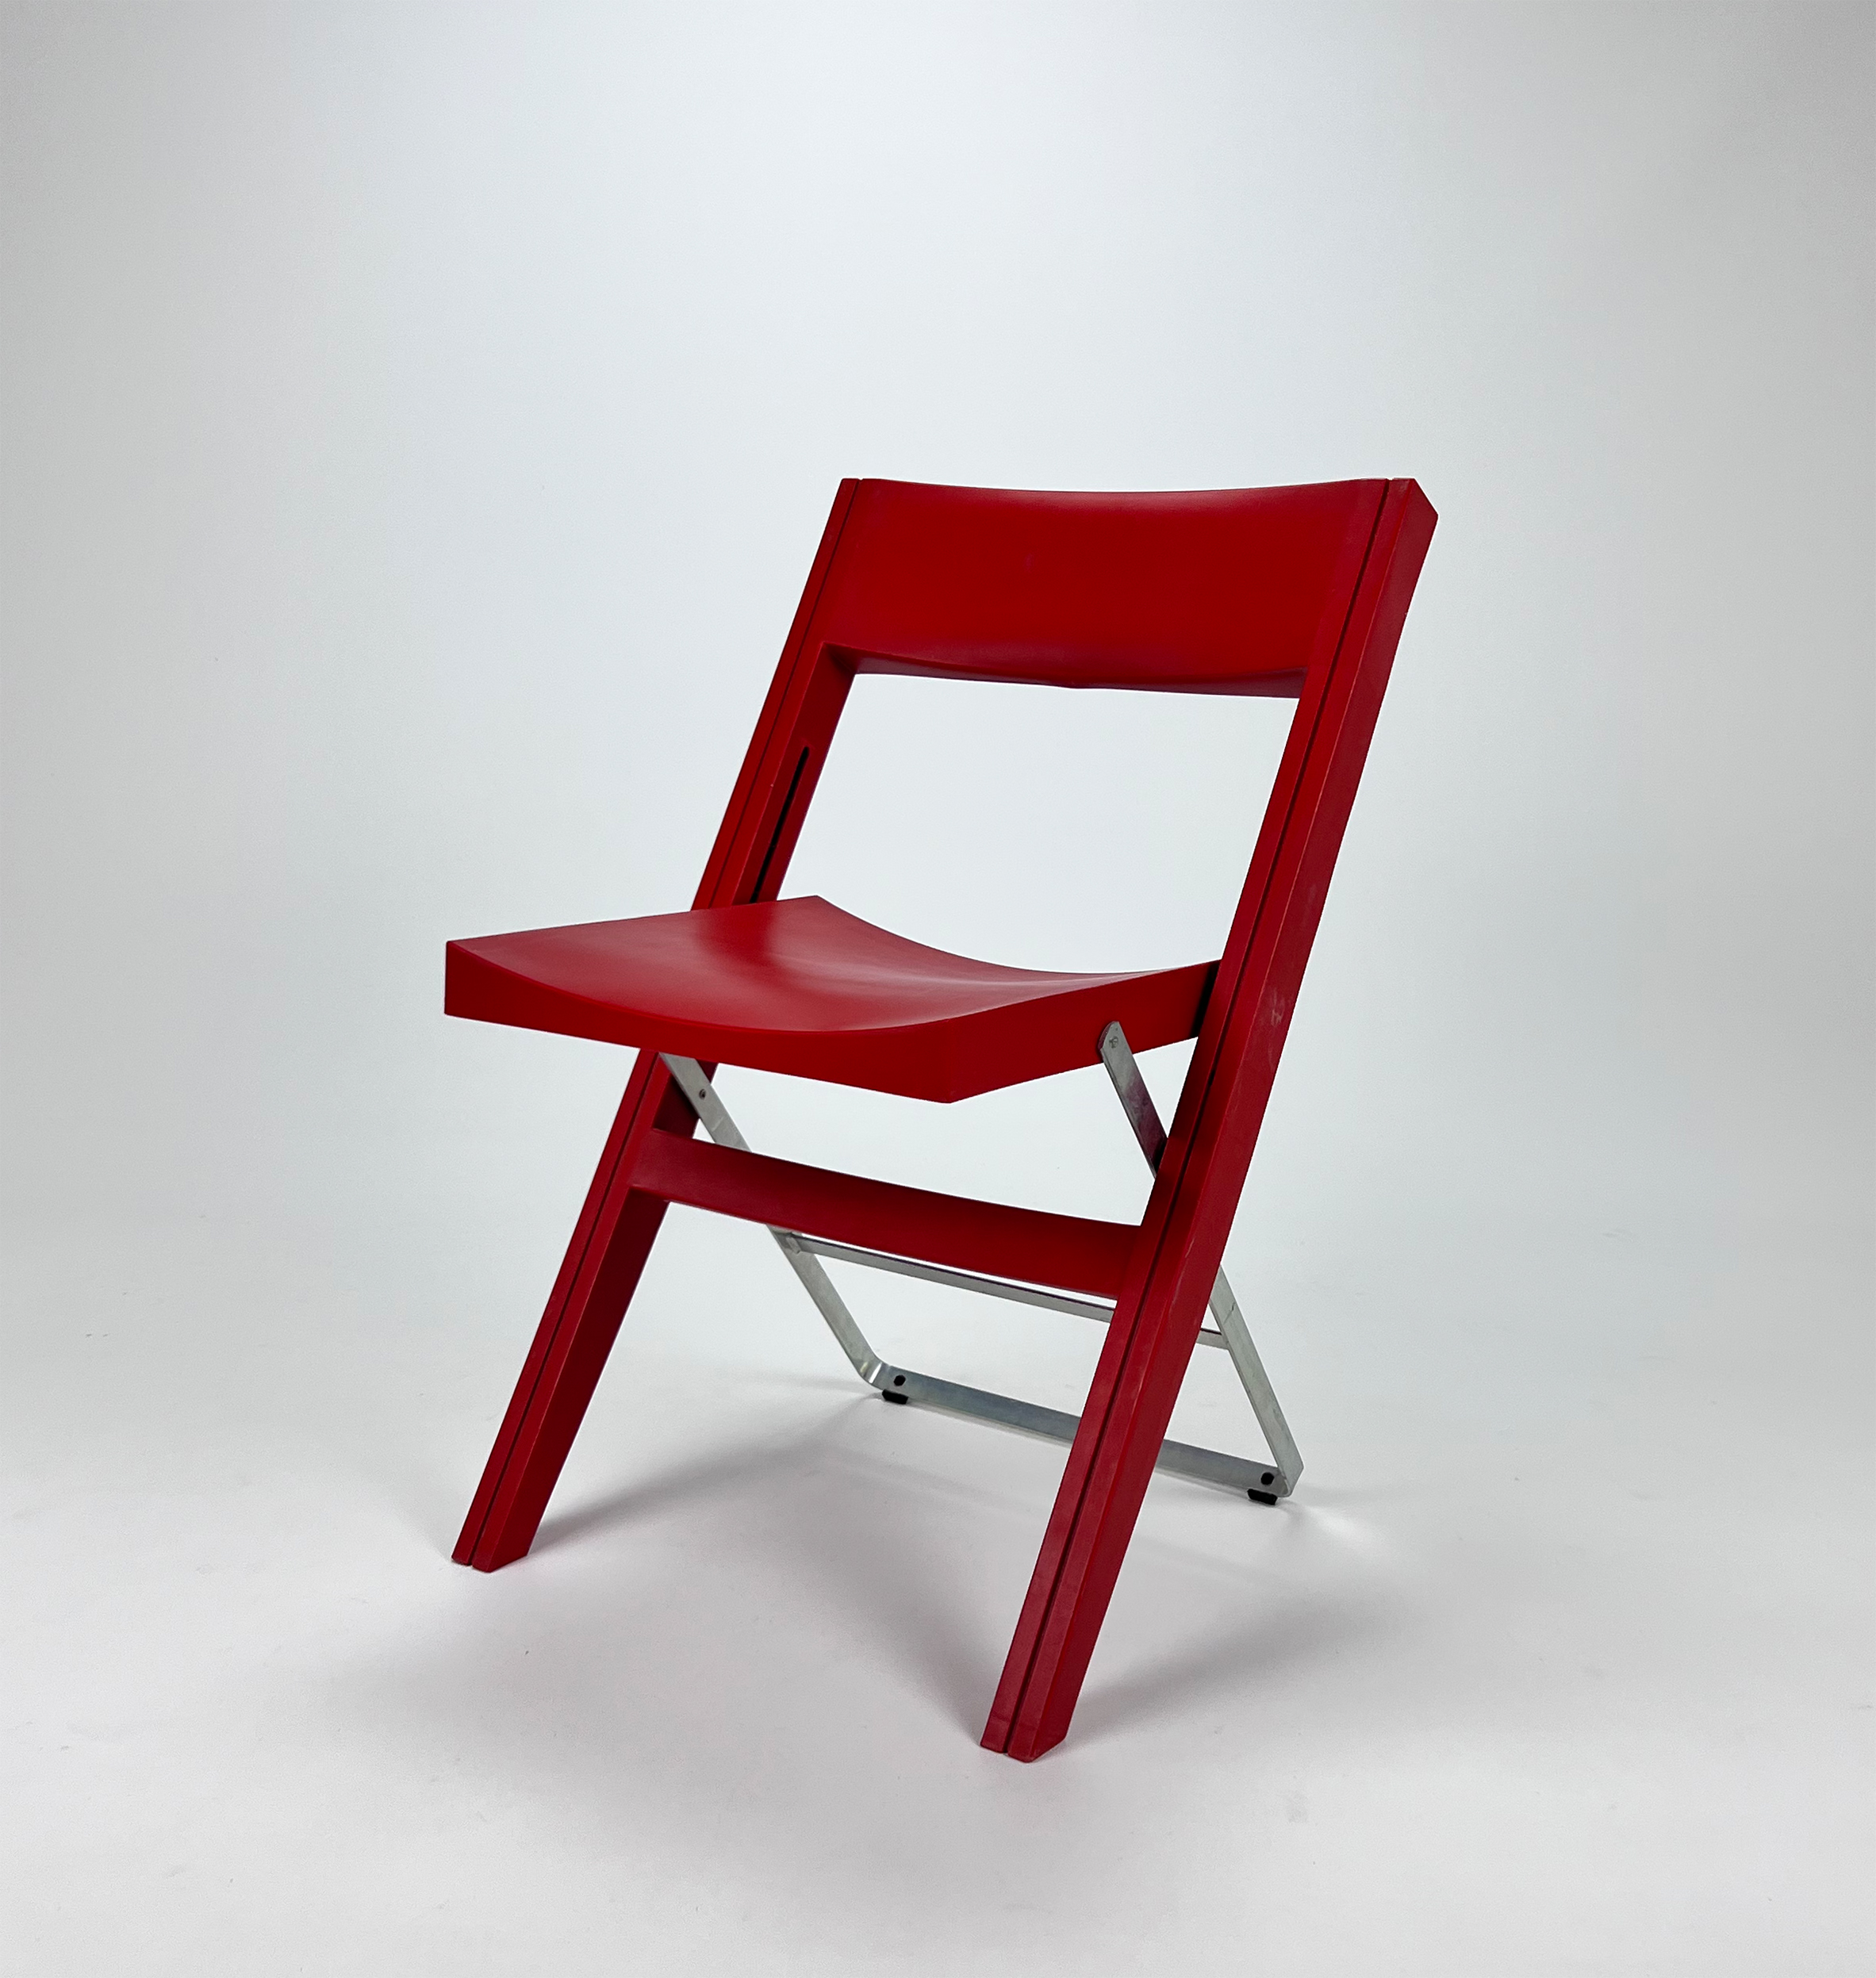 Sennik Folding Chair by Niels Gammelgaard for Design Studio Copenhagen, Ikea, 1993